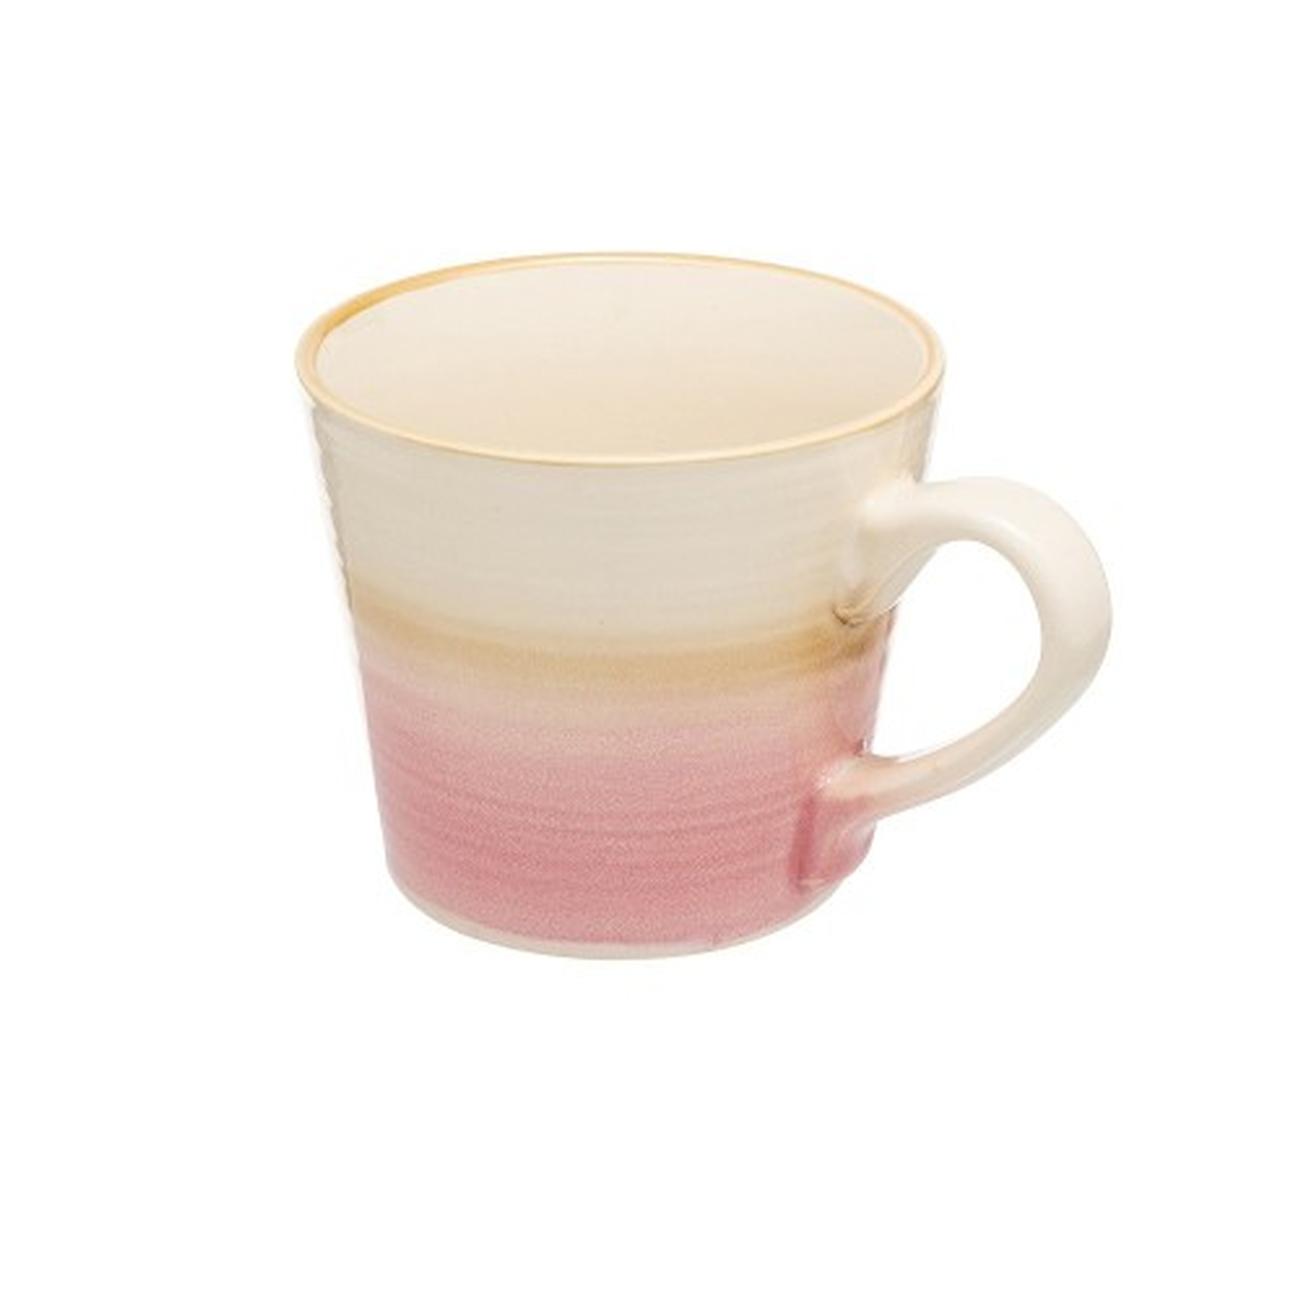 siip-gradient-reactive-glaze-mug-pink - Siip Reactive Glaze Mug-Pink Gradient